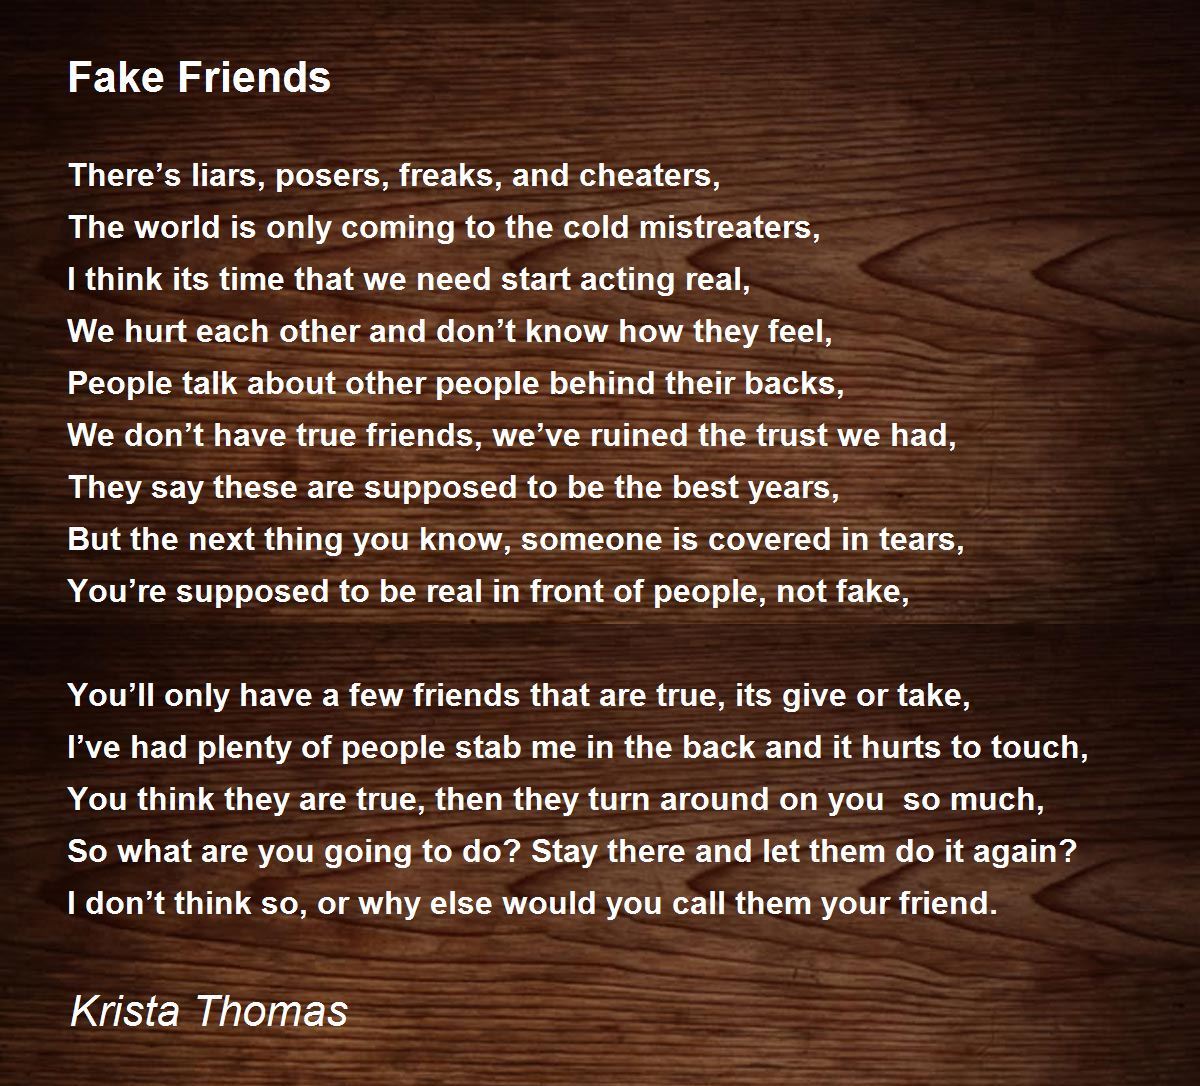 Fake Friends - Fake Friends Poem by Krista Thomas